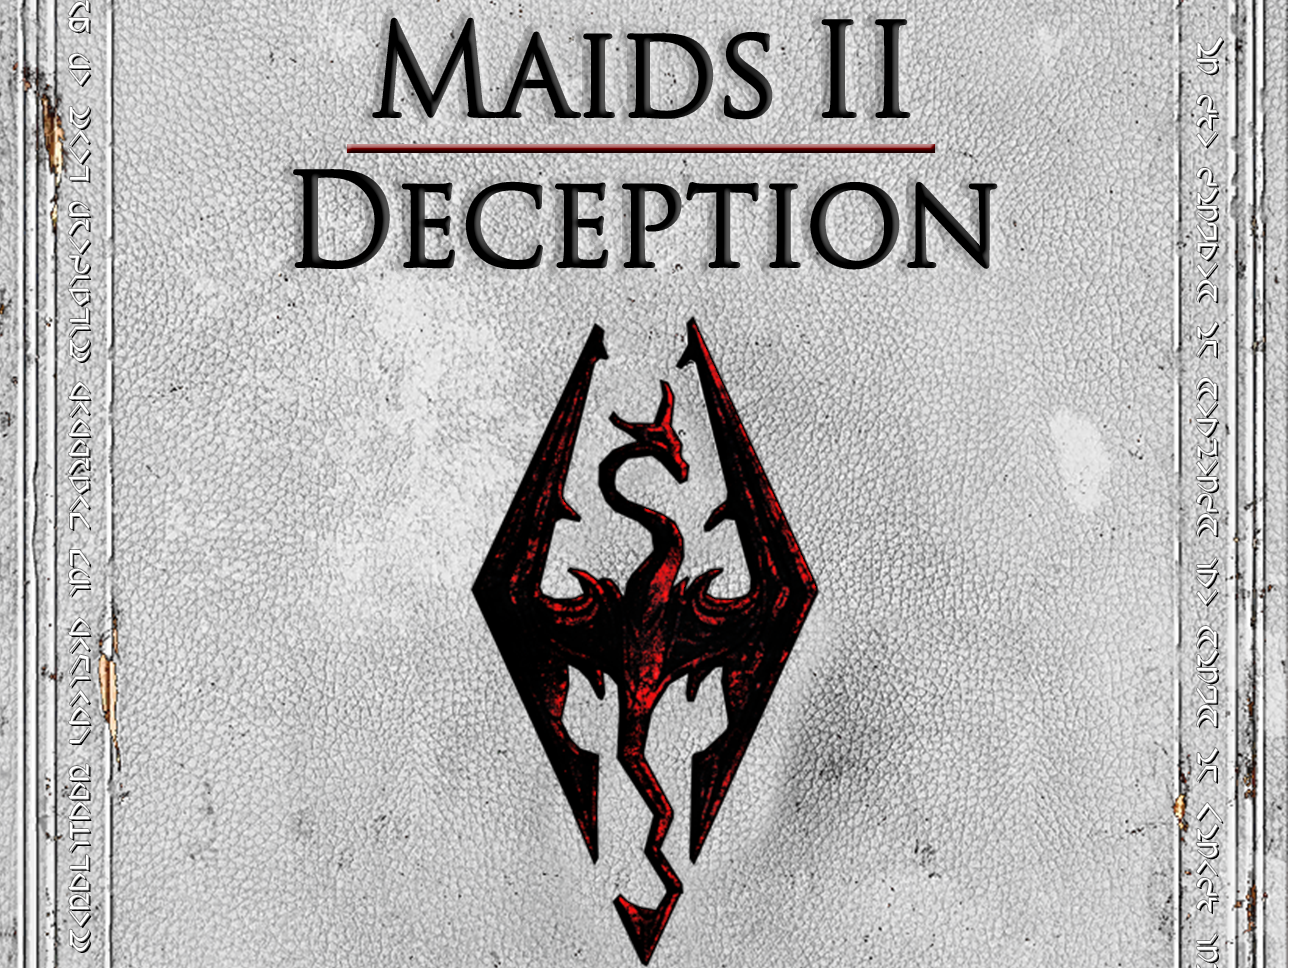 Maids II: Deception mod for Elder Scrolls V: Skyrim.